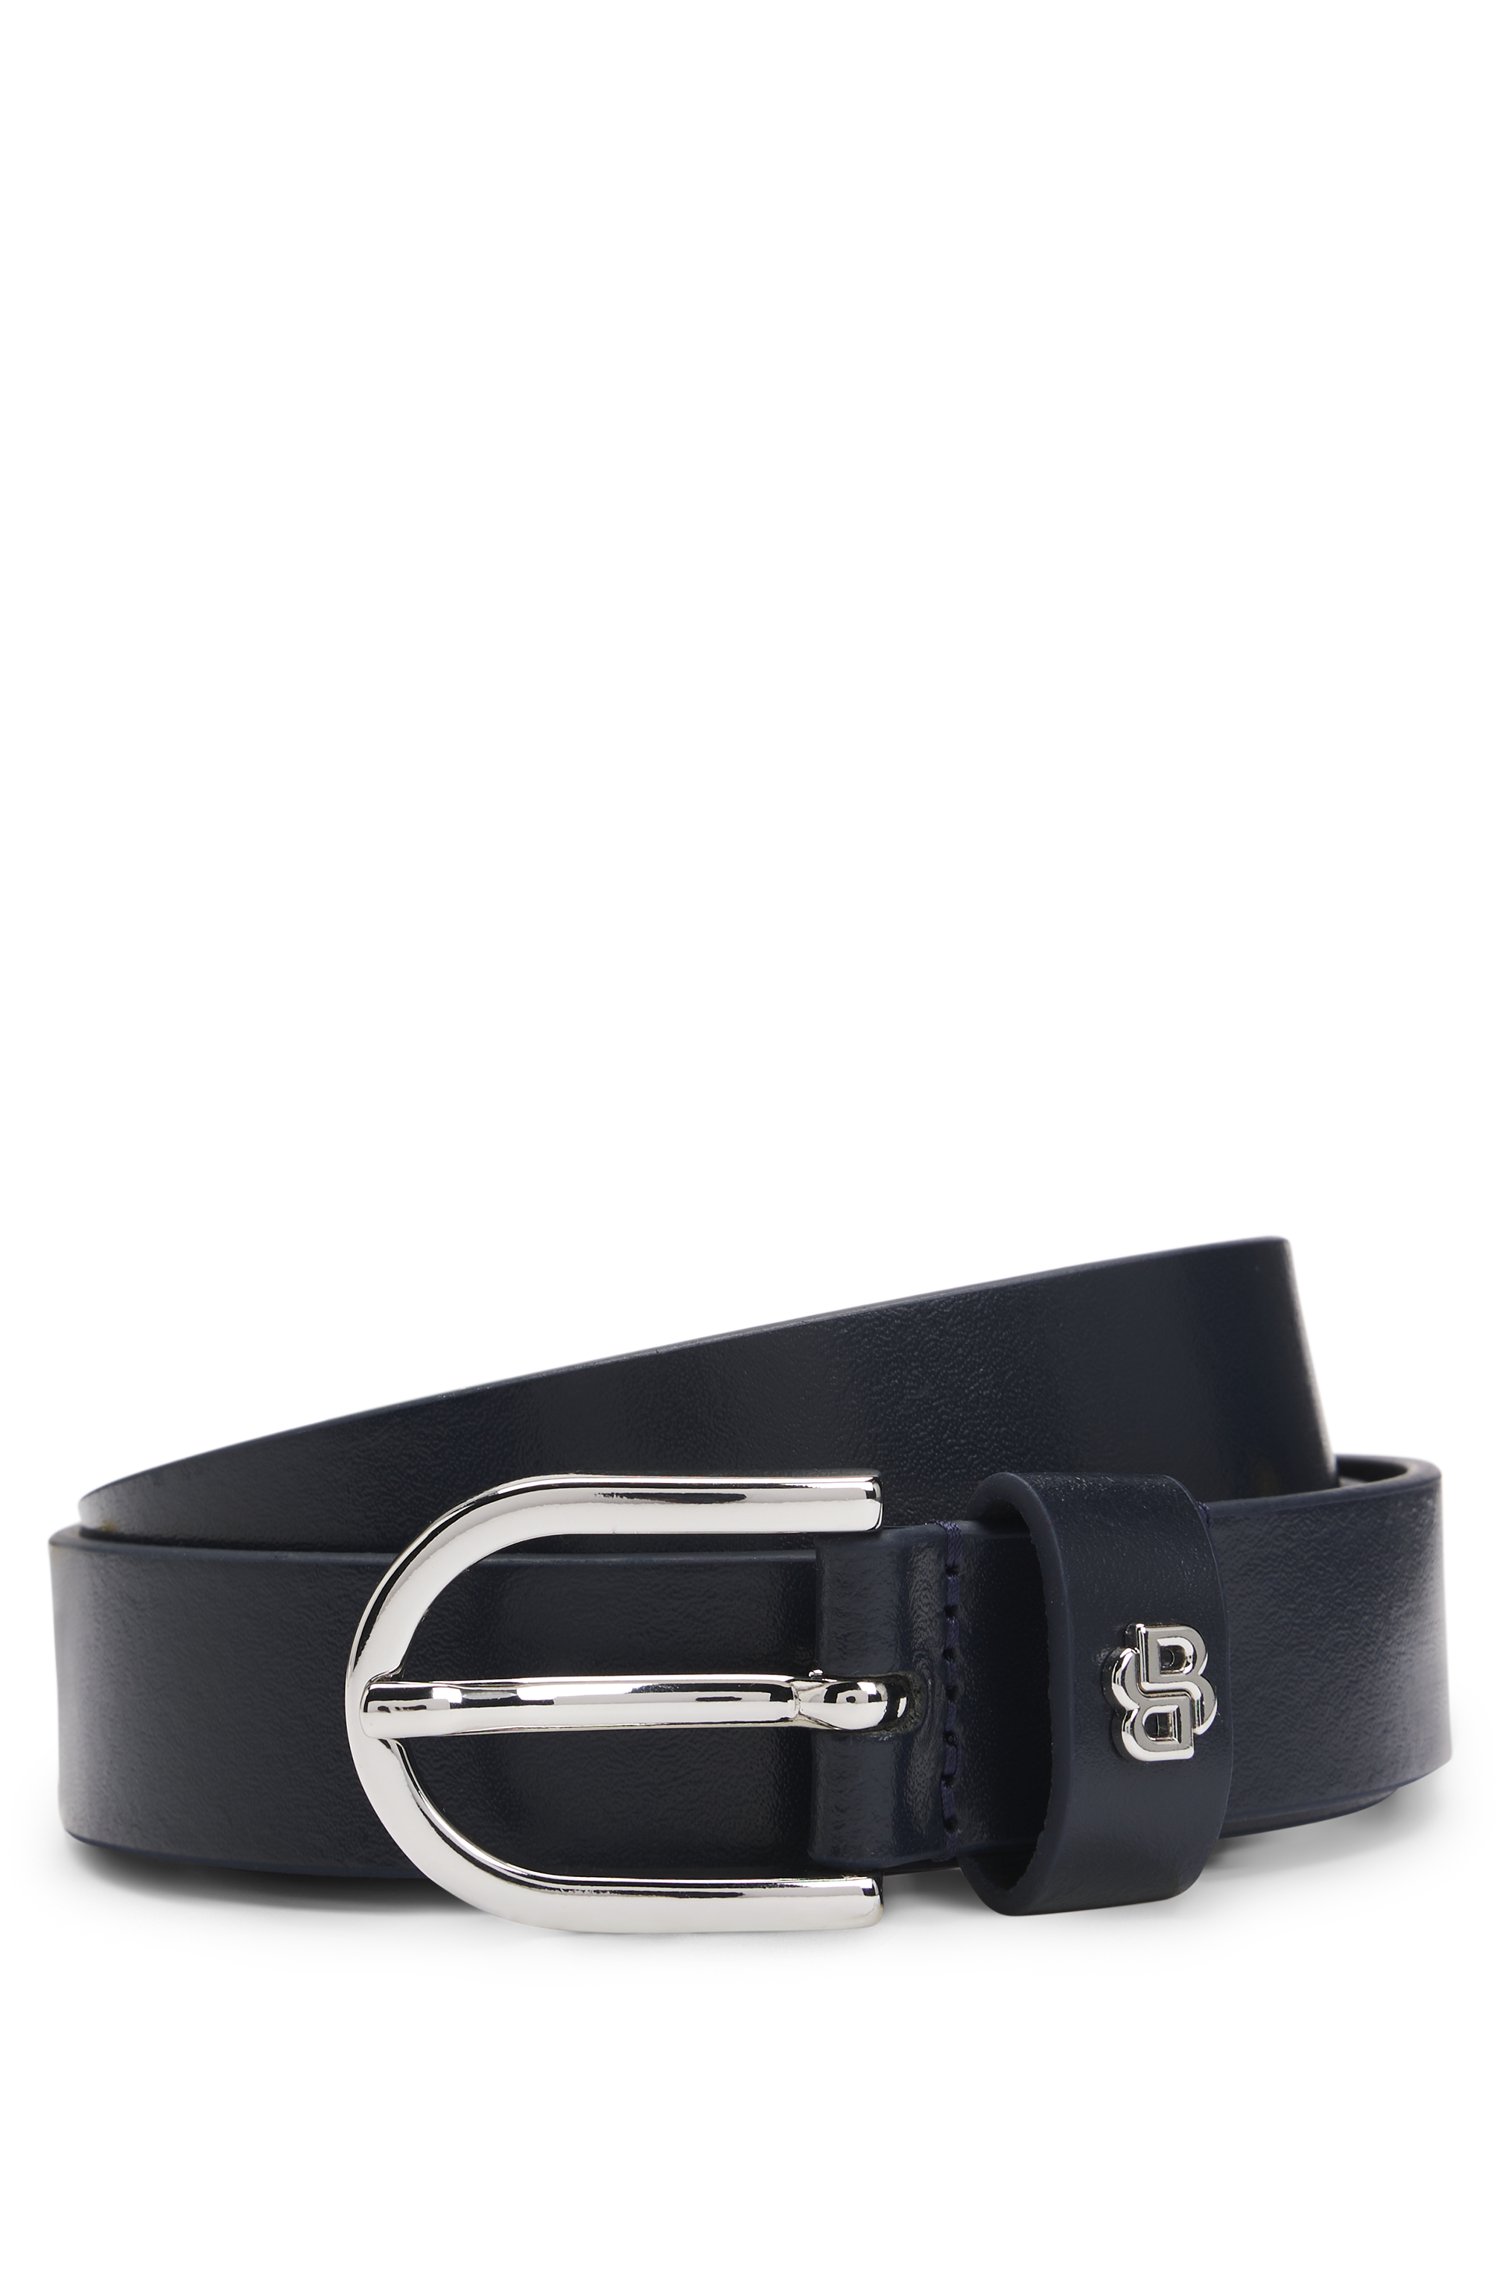 Italian-leather belt with Double B monogram